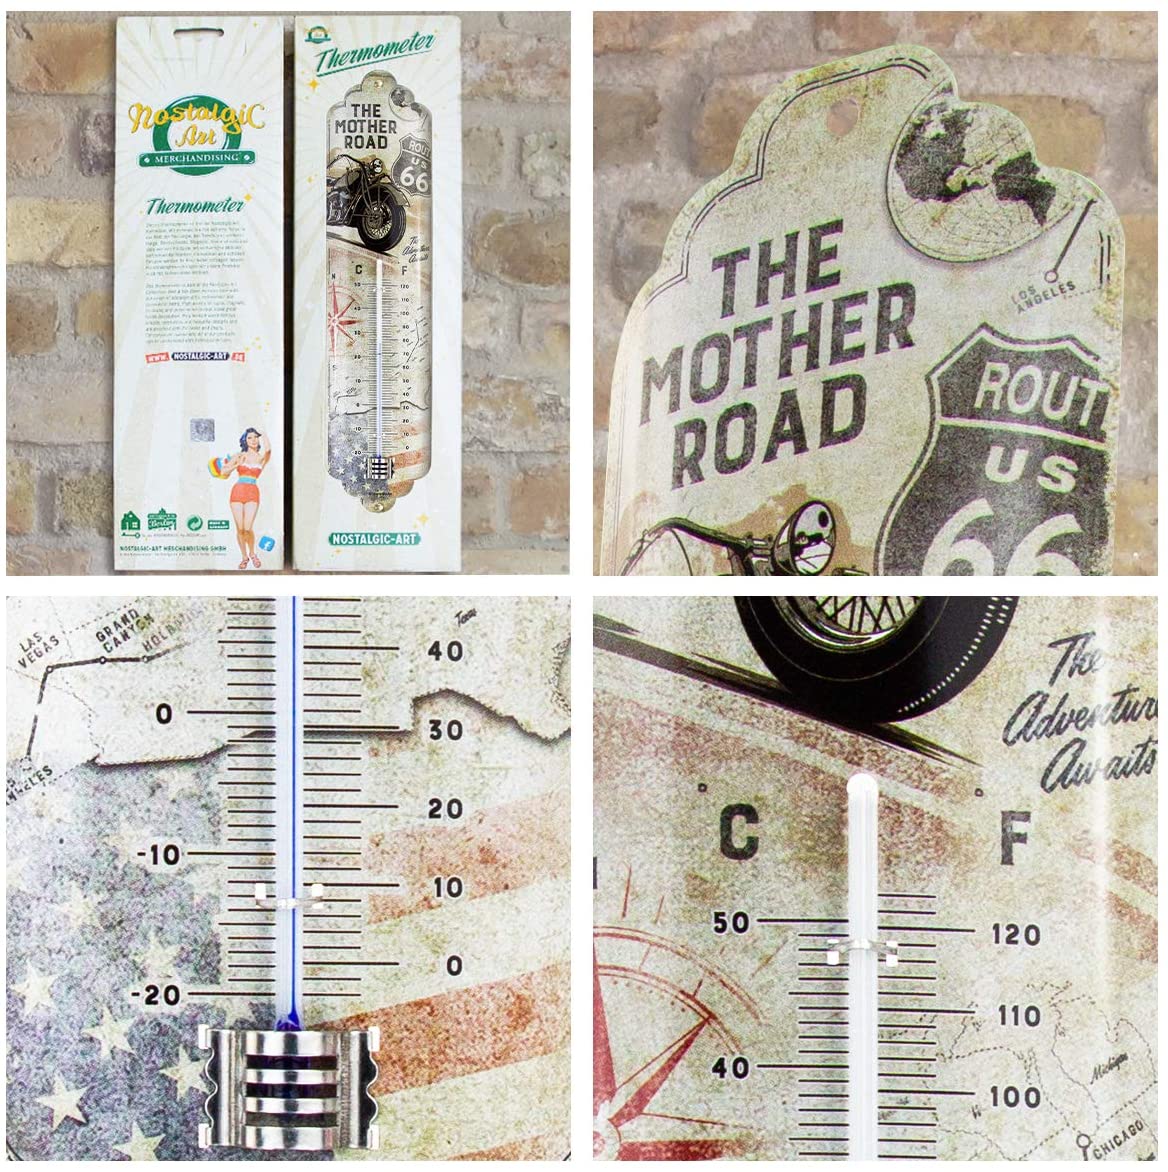 80327c-thermometre-murale-route-66-biker-nostalgic-art-vintage-retro